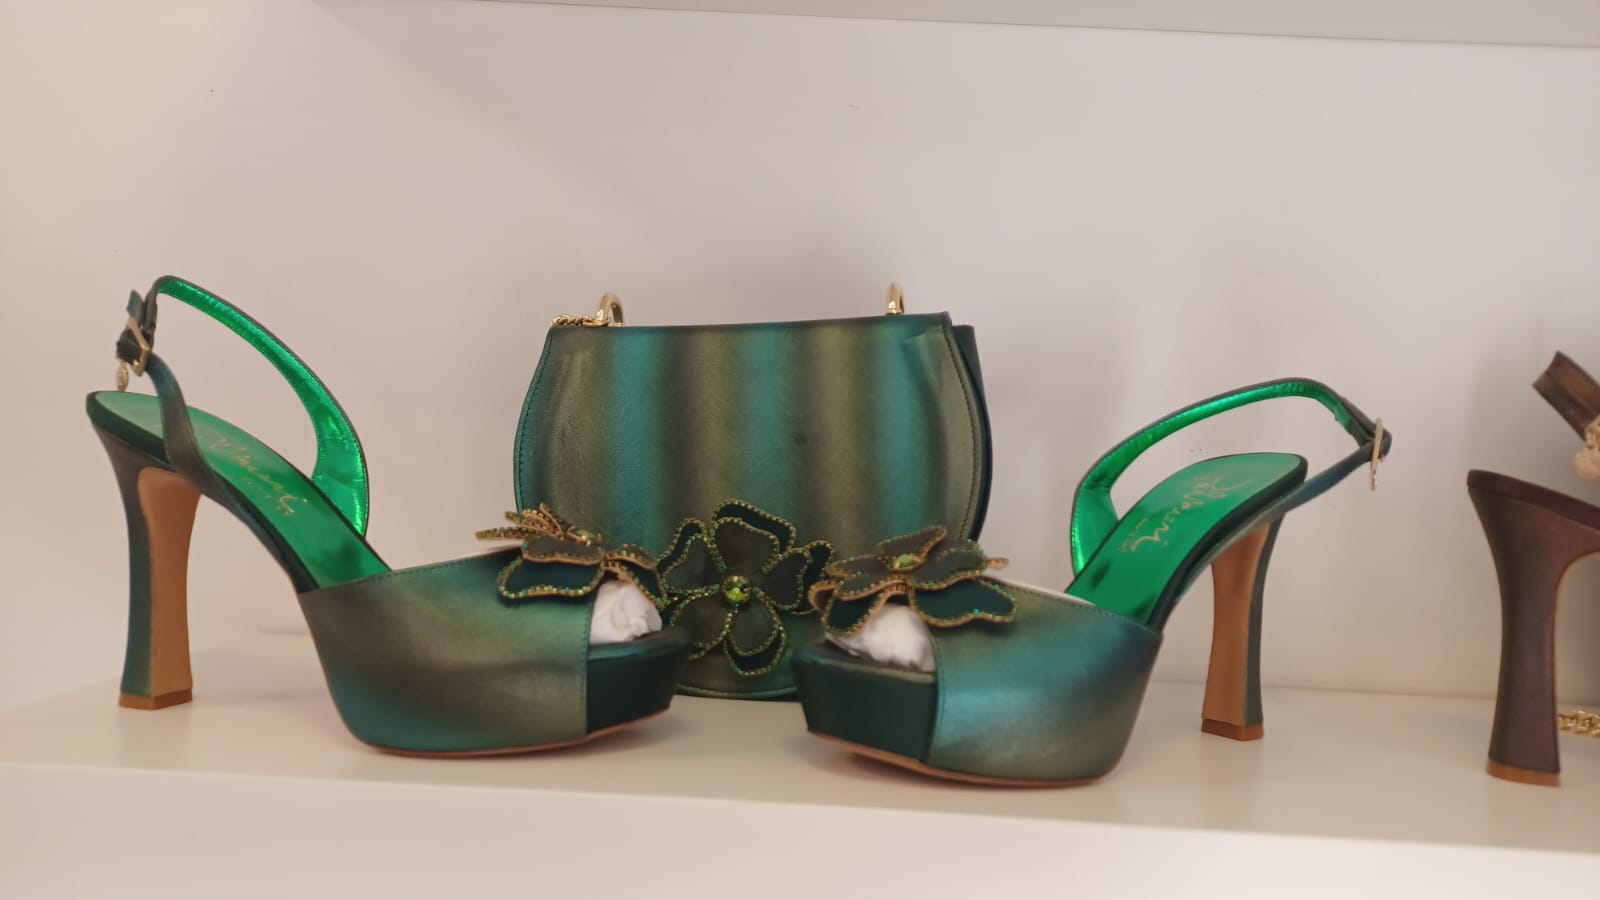 Italian shoes and bag set